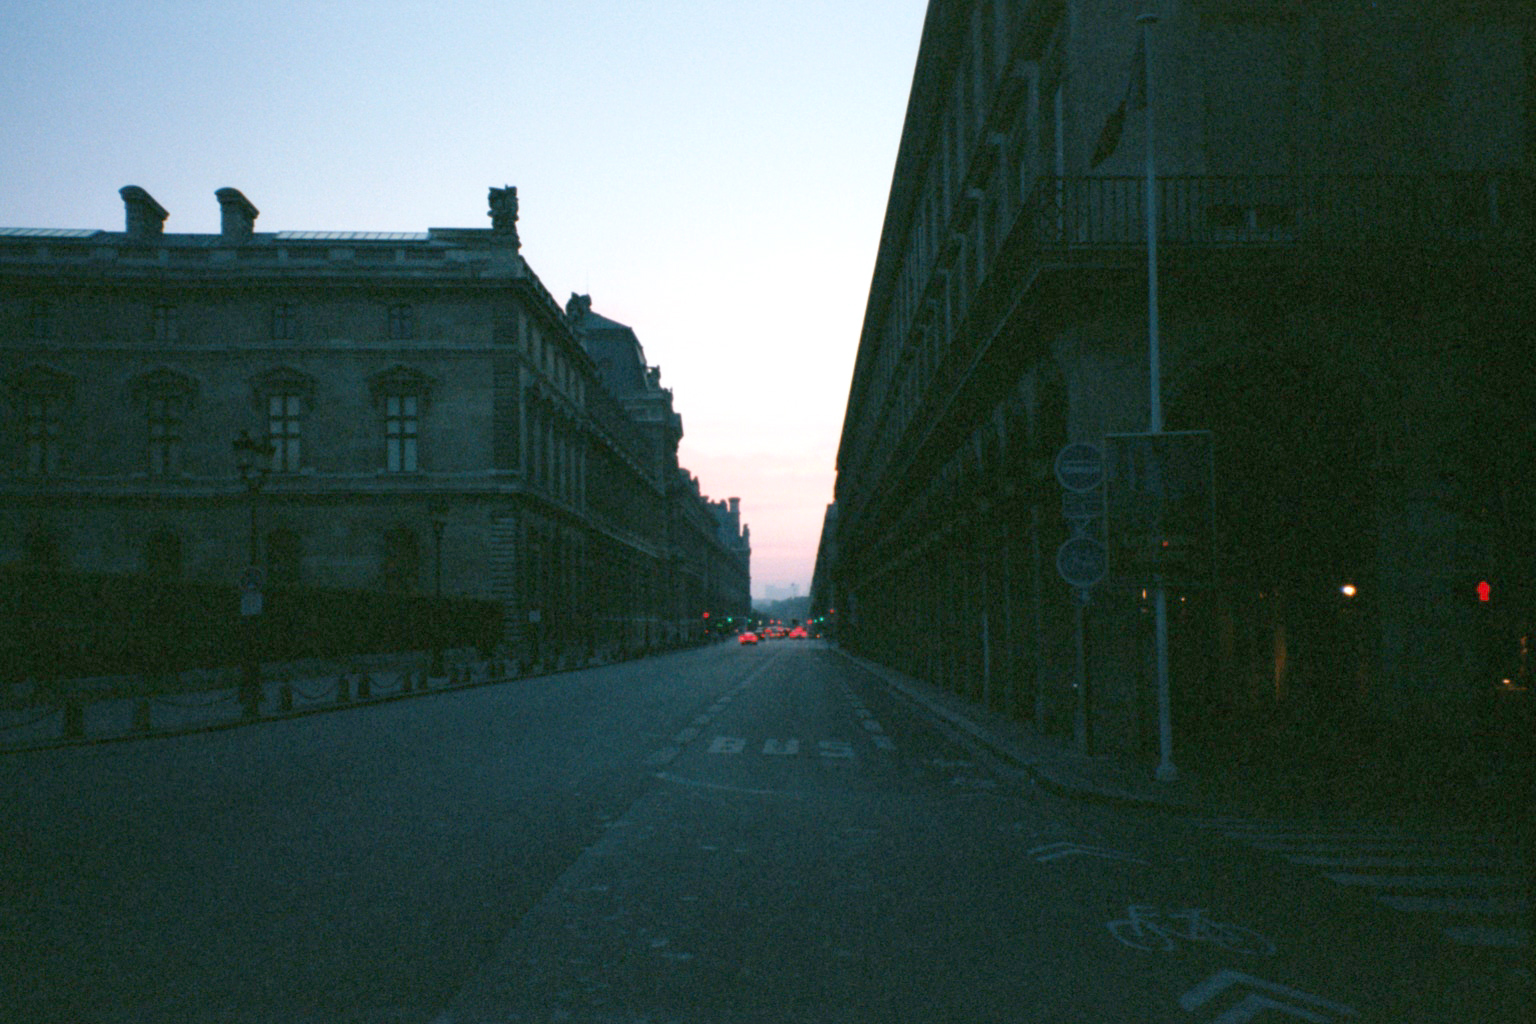 Paris street near Louvre